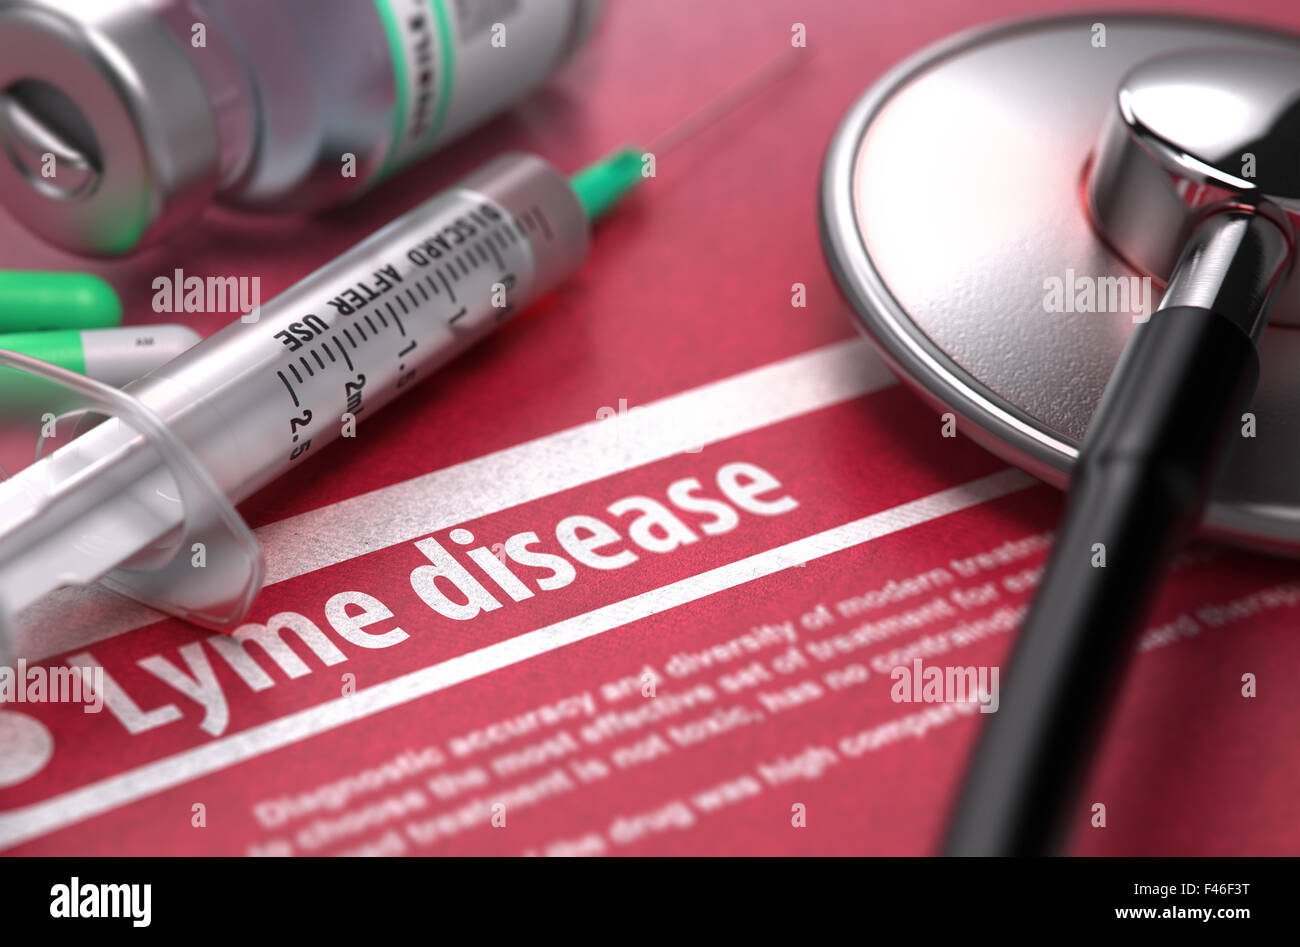 Lyme-Borreliose. Medizinisches Konzept auf rotem Grund. Stockfoto